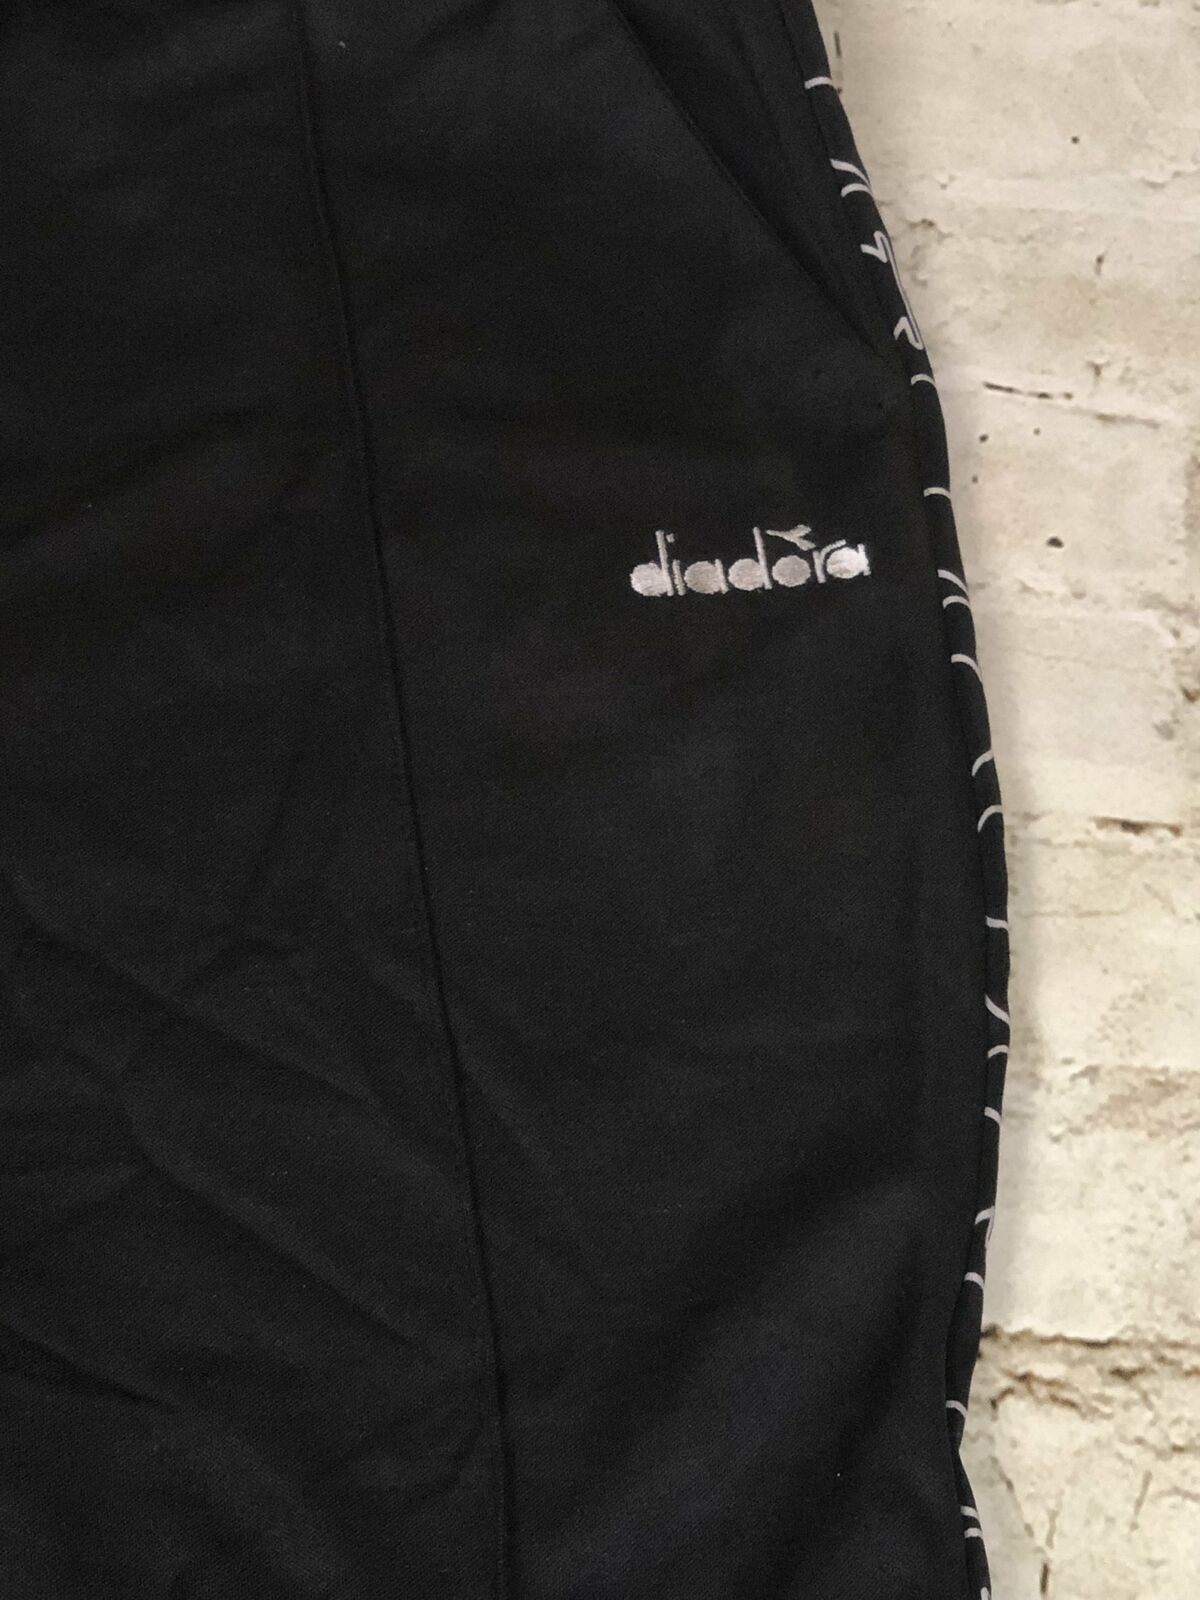 Diadora Logo 80s Style Retro Black Track Pants Joggers Men Size XL